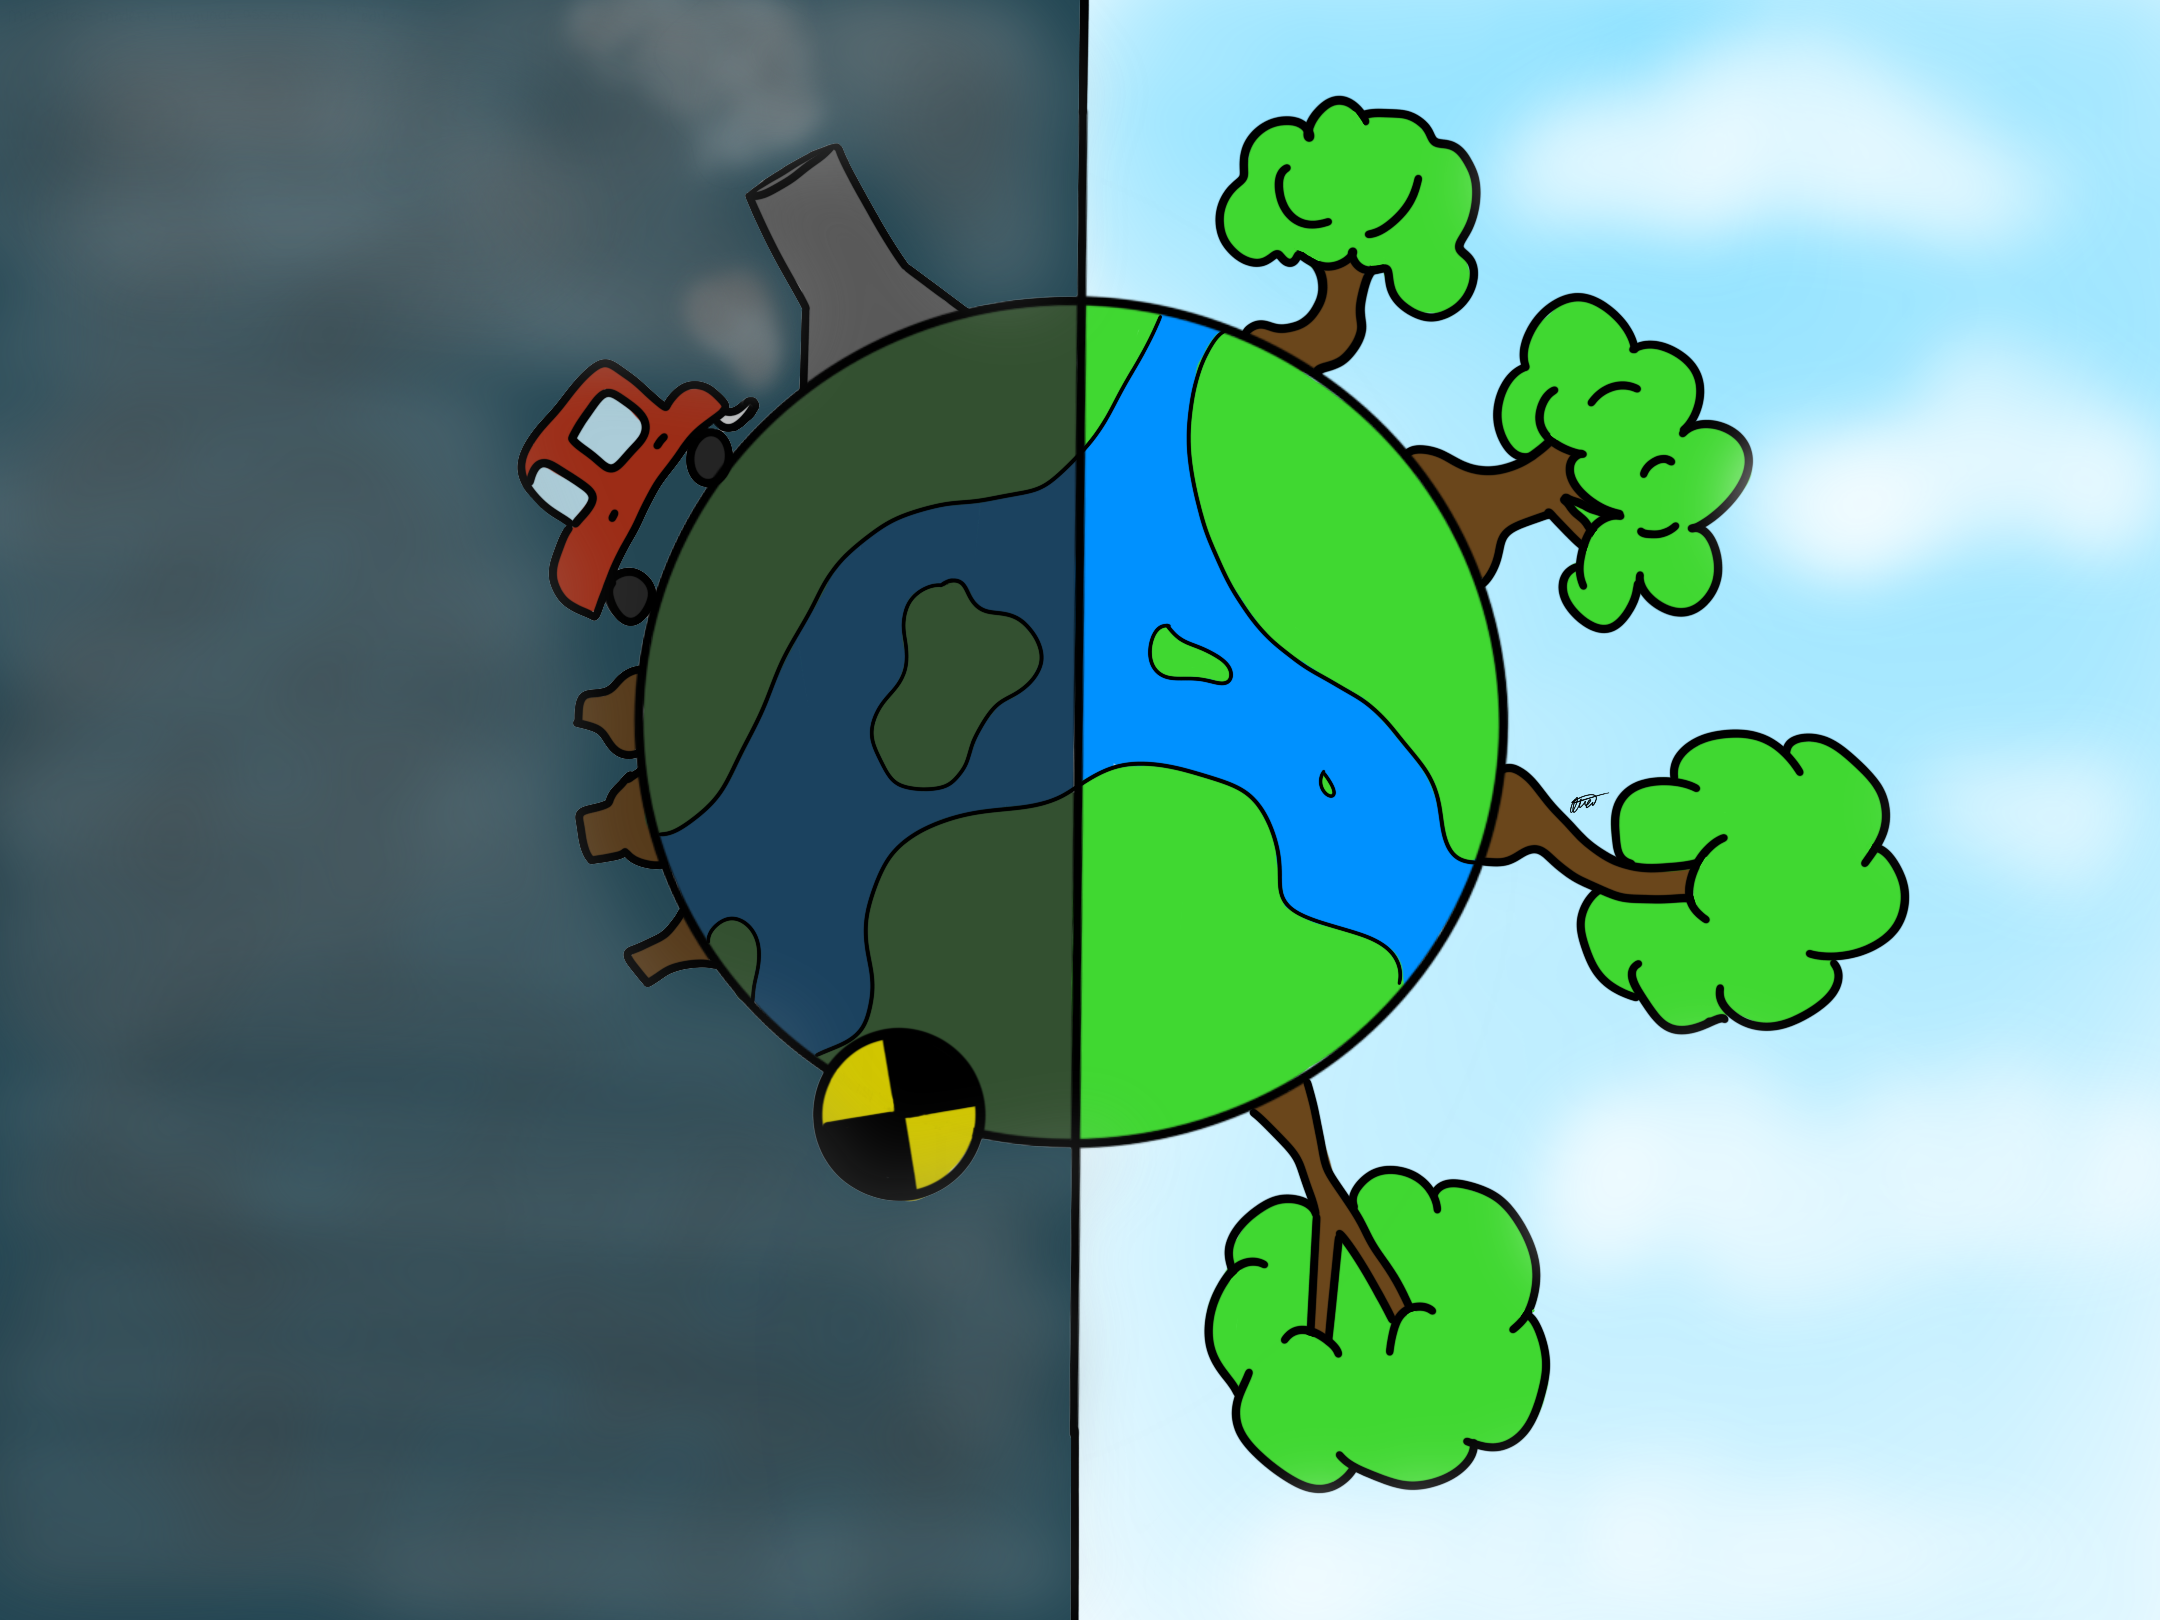 green earth clean earth drawing